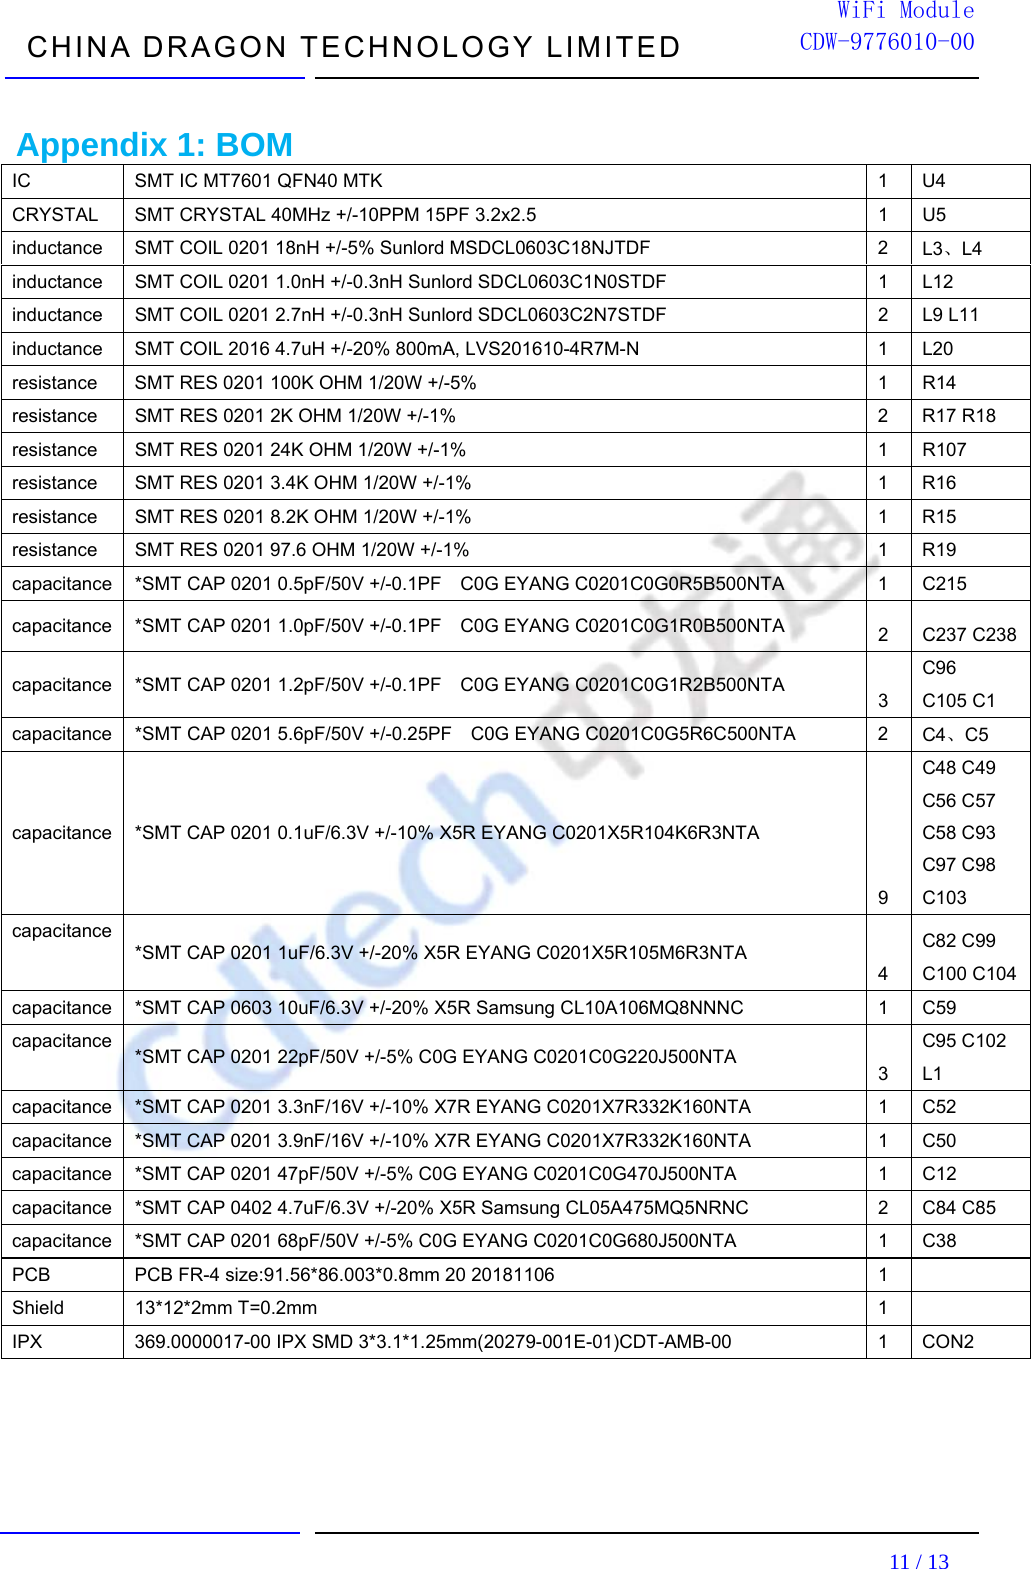  CHINA DRAGON TECHNOLOGY LIMITED                                                                         11 / 13  WiFi ModuleCDW-9776010-00 Appendix 1: BOM IC  SMT IC MT7601 QFN40 MTK  1  U4 CRYSTAL  SMT CRYSTAL 40MHz +/-10PPM 15PF 3.2x2.5  1  U5 inductance  SMT COIL 0201 18nH +/-5% Sunlord MSDCL0603C18NJTDF  2  L3、L4 inductance SMT COIL 0201 1.0nH +/-0.3nH Sunlord SDCL0603C1N0STDF  1  L12 inductance SMT COIL 0201 2.7nH +/-0.3nH Sunlord SDCL0603C2N7STDF  2  L9 L11 inductance  SMT COIL 2016 4.7uH +/-20% 800mA, LVS201610-4R7M-N  1  L20 resistance  SMT RES 0201 100K OHM 1/20W +/-5%  1  R14 resistance SMT RES 0201 2K OHM 1/20W +/-1%  2  R17 R18 resistance SMT RES 0201 24K OHM 1/20W +/-1%  1  R107 resistance SMT RES 0201 3.4K OHM 1/20W +/-1%  1  R16 resistance SMT RES 0201 8.2K OHM 1/20W +/-1%  1  R15 resistance SMT RES 0201 97.6 OHM 1/20W +/-1%  1  R19 capacitance  *SMT CAP 0201 0.5pF/50V +/-0.1PF  C0G EYANG C0201C0G0R5B500NTA  1  C215 capacitance *SMT CAP 0201 1.0pF/50V +/-0.1PF    C0G EYANG C0201C0G1R0B500NTA  2 C237 C238capacitance *SMT CAP 0201 1.2pF/50V +/-0.1PF    C0G EYANG C0201C0G1R2B500NTA  3 C96  C105 C1 capacitance *SMT CAP 0201 5.6pF/50V +/-0.25PF    C0G EYANG C0201C0G5R6C500NTA  2  C4、C5 capacitance *SMT CAP 0201 0.1uF/6.3V +/-10% X5R EYANG C0201X5R104K6R3NTA 9 C48 C49 C56 C57 C58 C93 C97 C98 C103 capacitance *SMT CAP 0201 1uF/6.3V +/-20% X5R EYANG C0201X5R105M6R3NTA 4 C82 C99 C100 C104capacitance *SMT CAP 0603 10uF/6.3V +/-20% X5R Samsung CL10A106MQ8NNNC  1  C59 capacitance *SMT CAP 0201 22pF/50V +/-5% C0G EYANG C0201C0G220J500NTA  3 C95 C102   L1 capacitance *SMT CAP 0201 3.3nF/16V +/-10% X7R EYANG C0201X7R332K160NTA  1  C52 capacitance *SMT CAP 0201 3.9nF/16V +/-10% X7R EYANG C0201X7R332K160NTA  1  C50 capacitance *SMT CAP 0201 47pF/50V +/-5% C0G EYANG C0201C0G470J500NTA  1  C12 capacitance *SMT CAP 0402 4.7uF/6.3V +/-20% X5R Samsung CL05A475MQ5NRNC  2  C84 C85 capacitance *SMT CAP 0201 68pF/50V +/-5% C0G EYANG C0201C0G680J500NTA  1  C38 PCB  PCB FR-4 size:91.56*86.003*0.8mm 20 20181106  1 Shield 13*12*2mm T=0.2mm  1 IPX  369.0000017-00 IPX SMD 3*3.1*1.25mm(20279-001E-01)CDT-AMB-00 1 CON2     